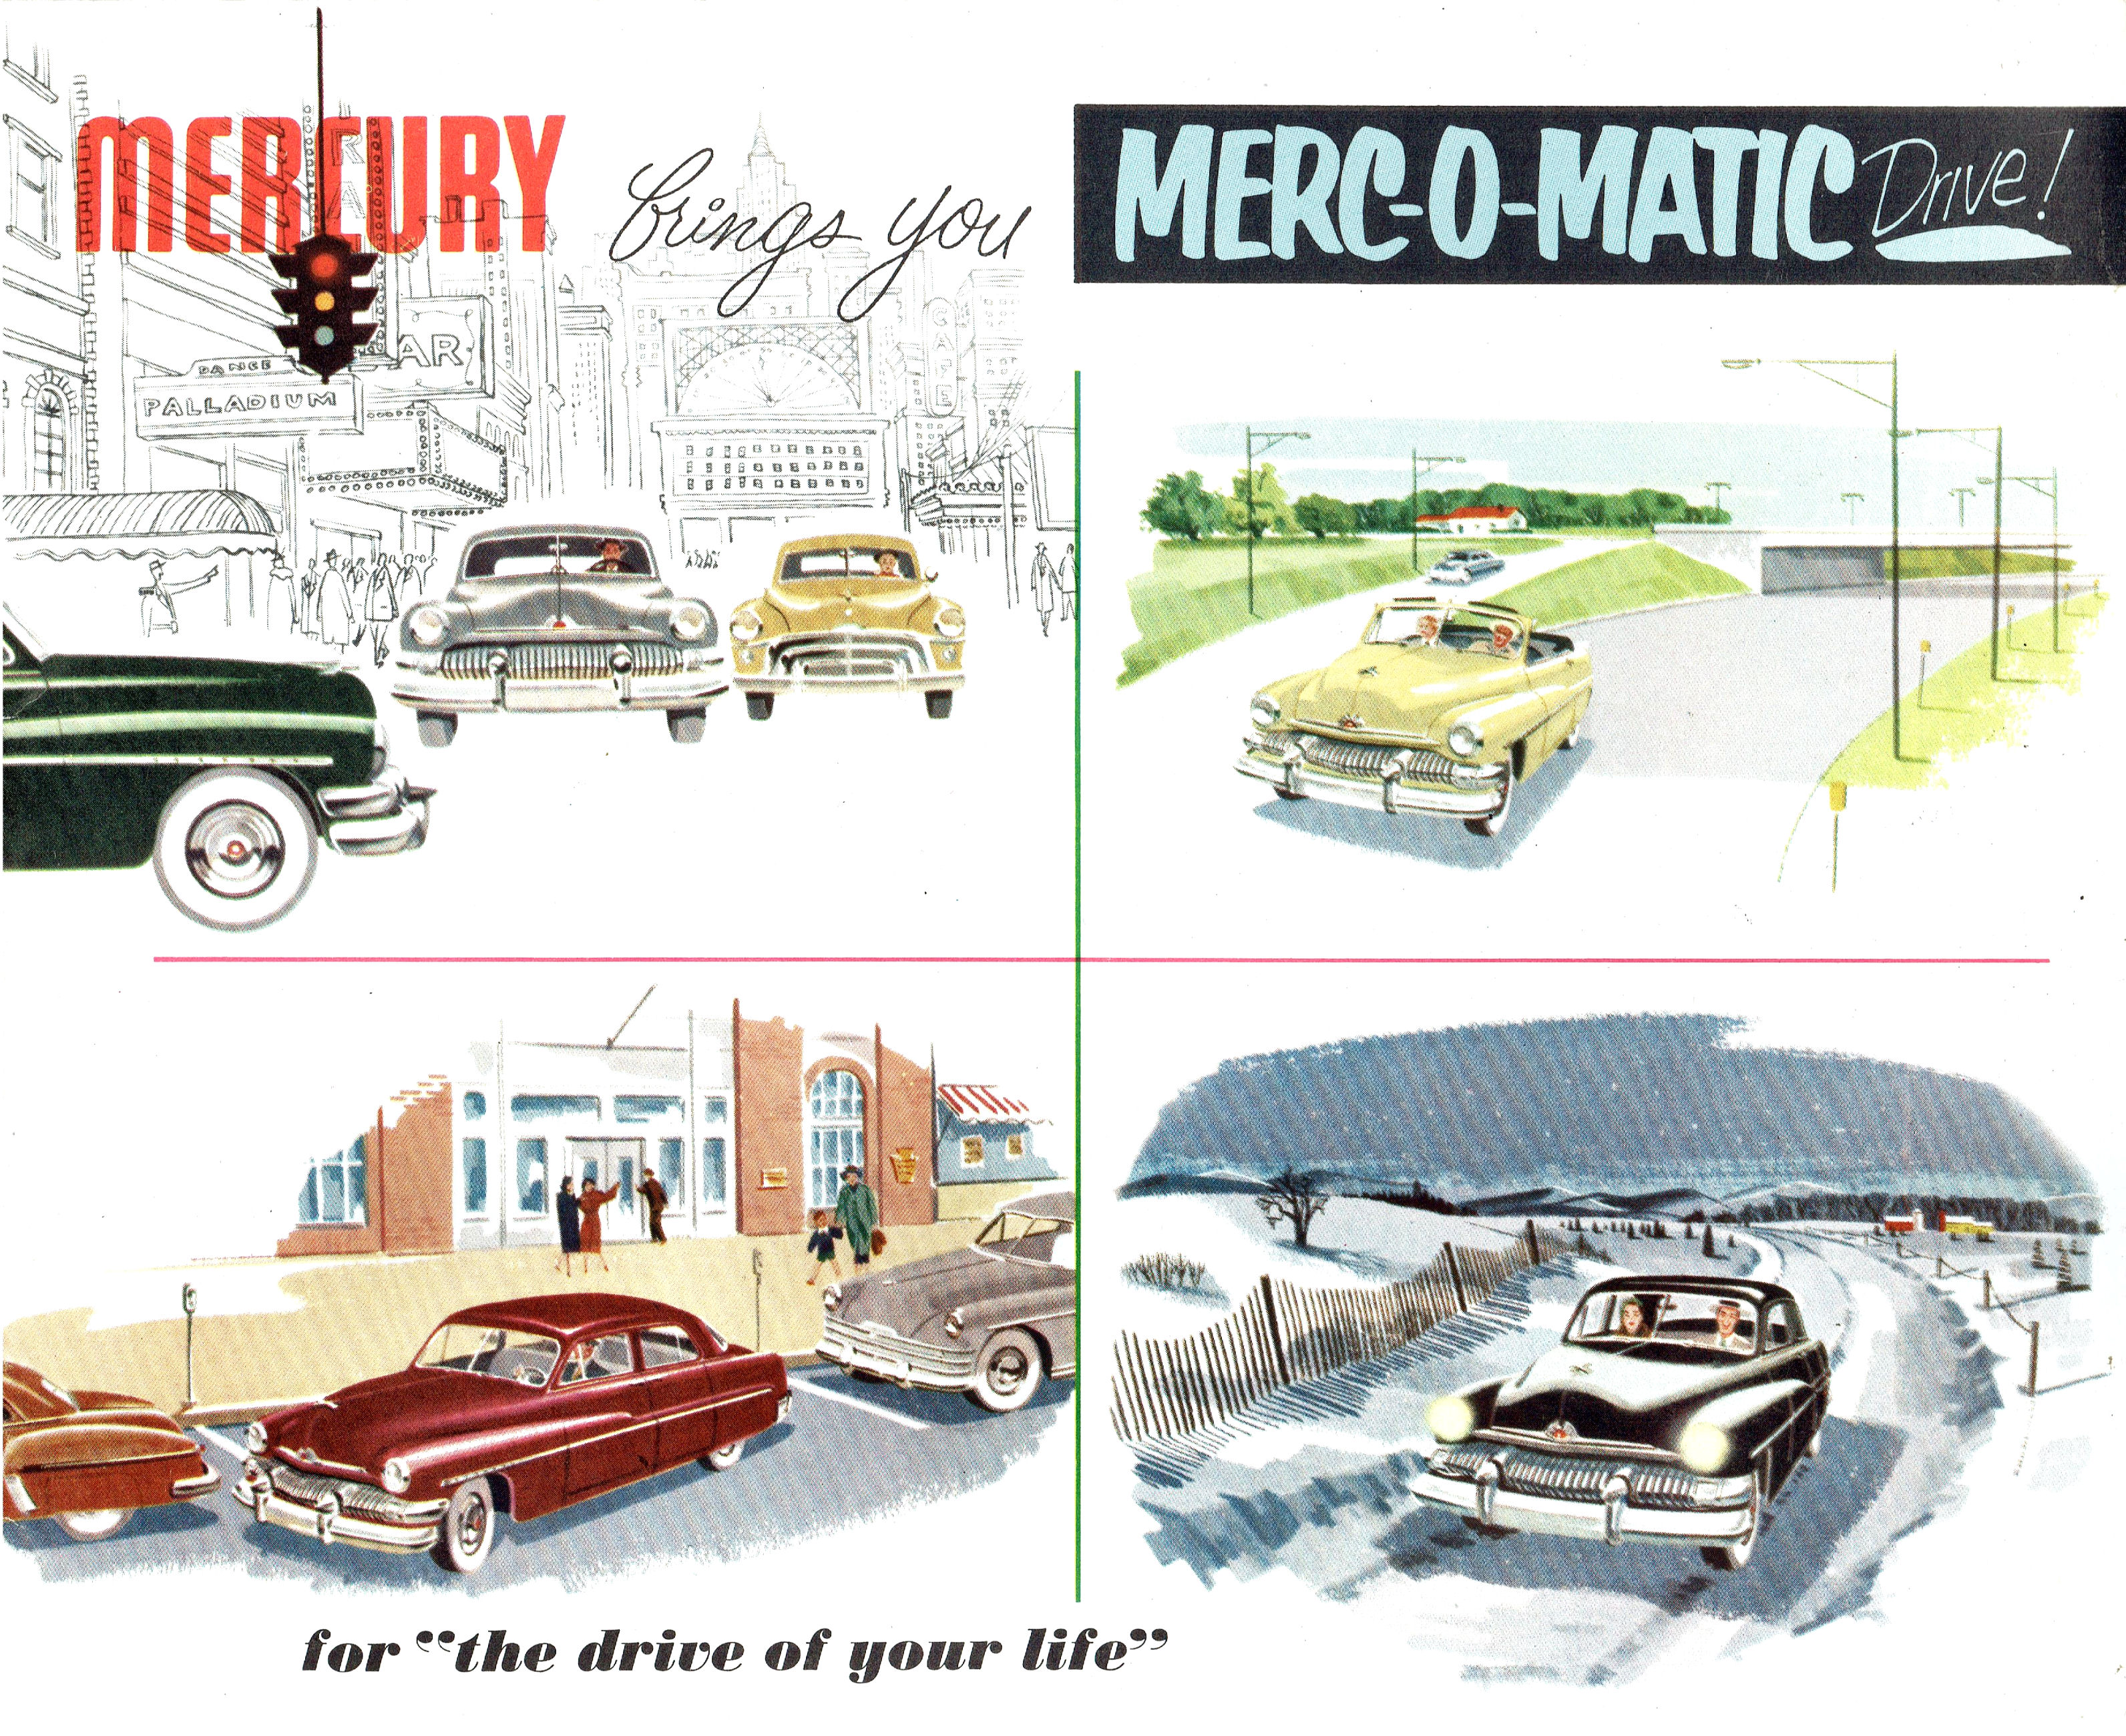 1951 Mercury Merc-O-Matic Drive-01